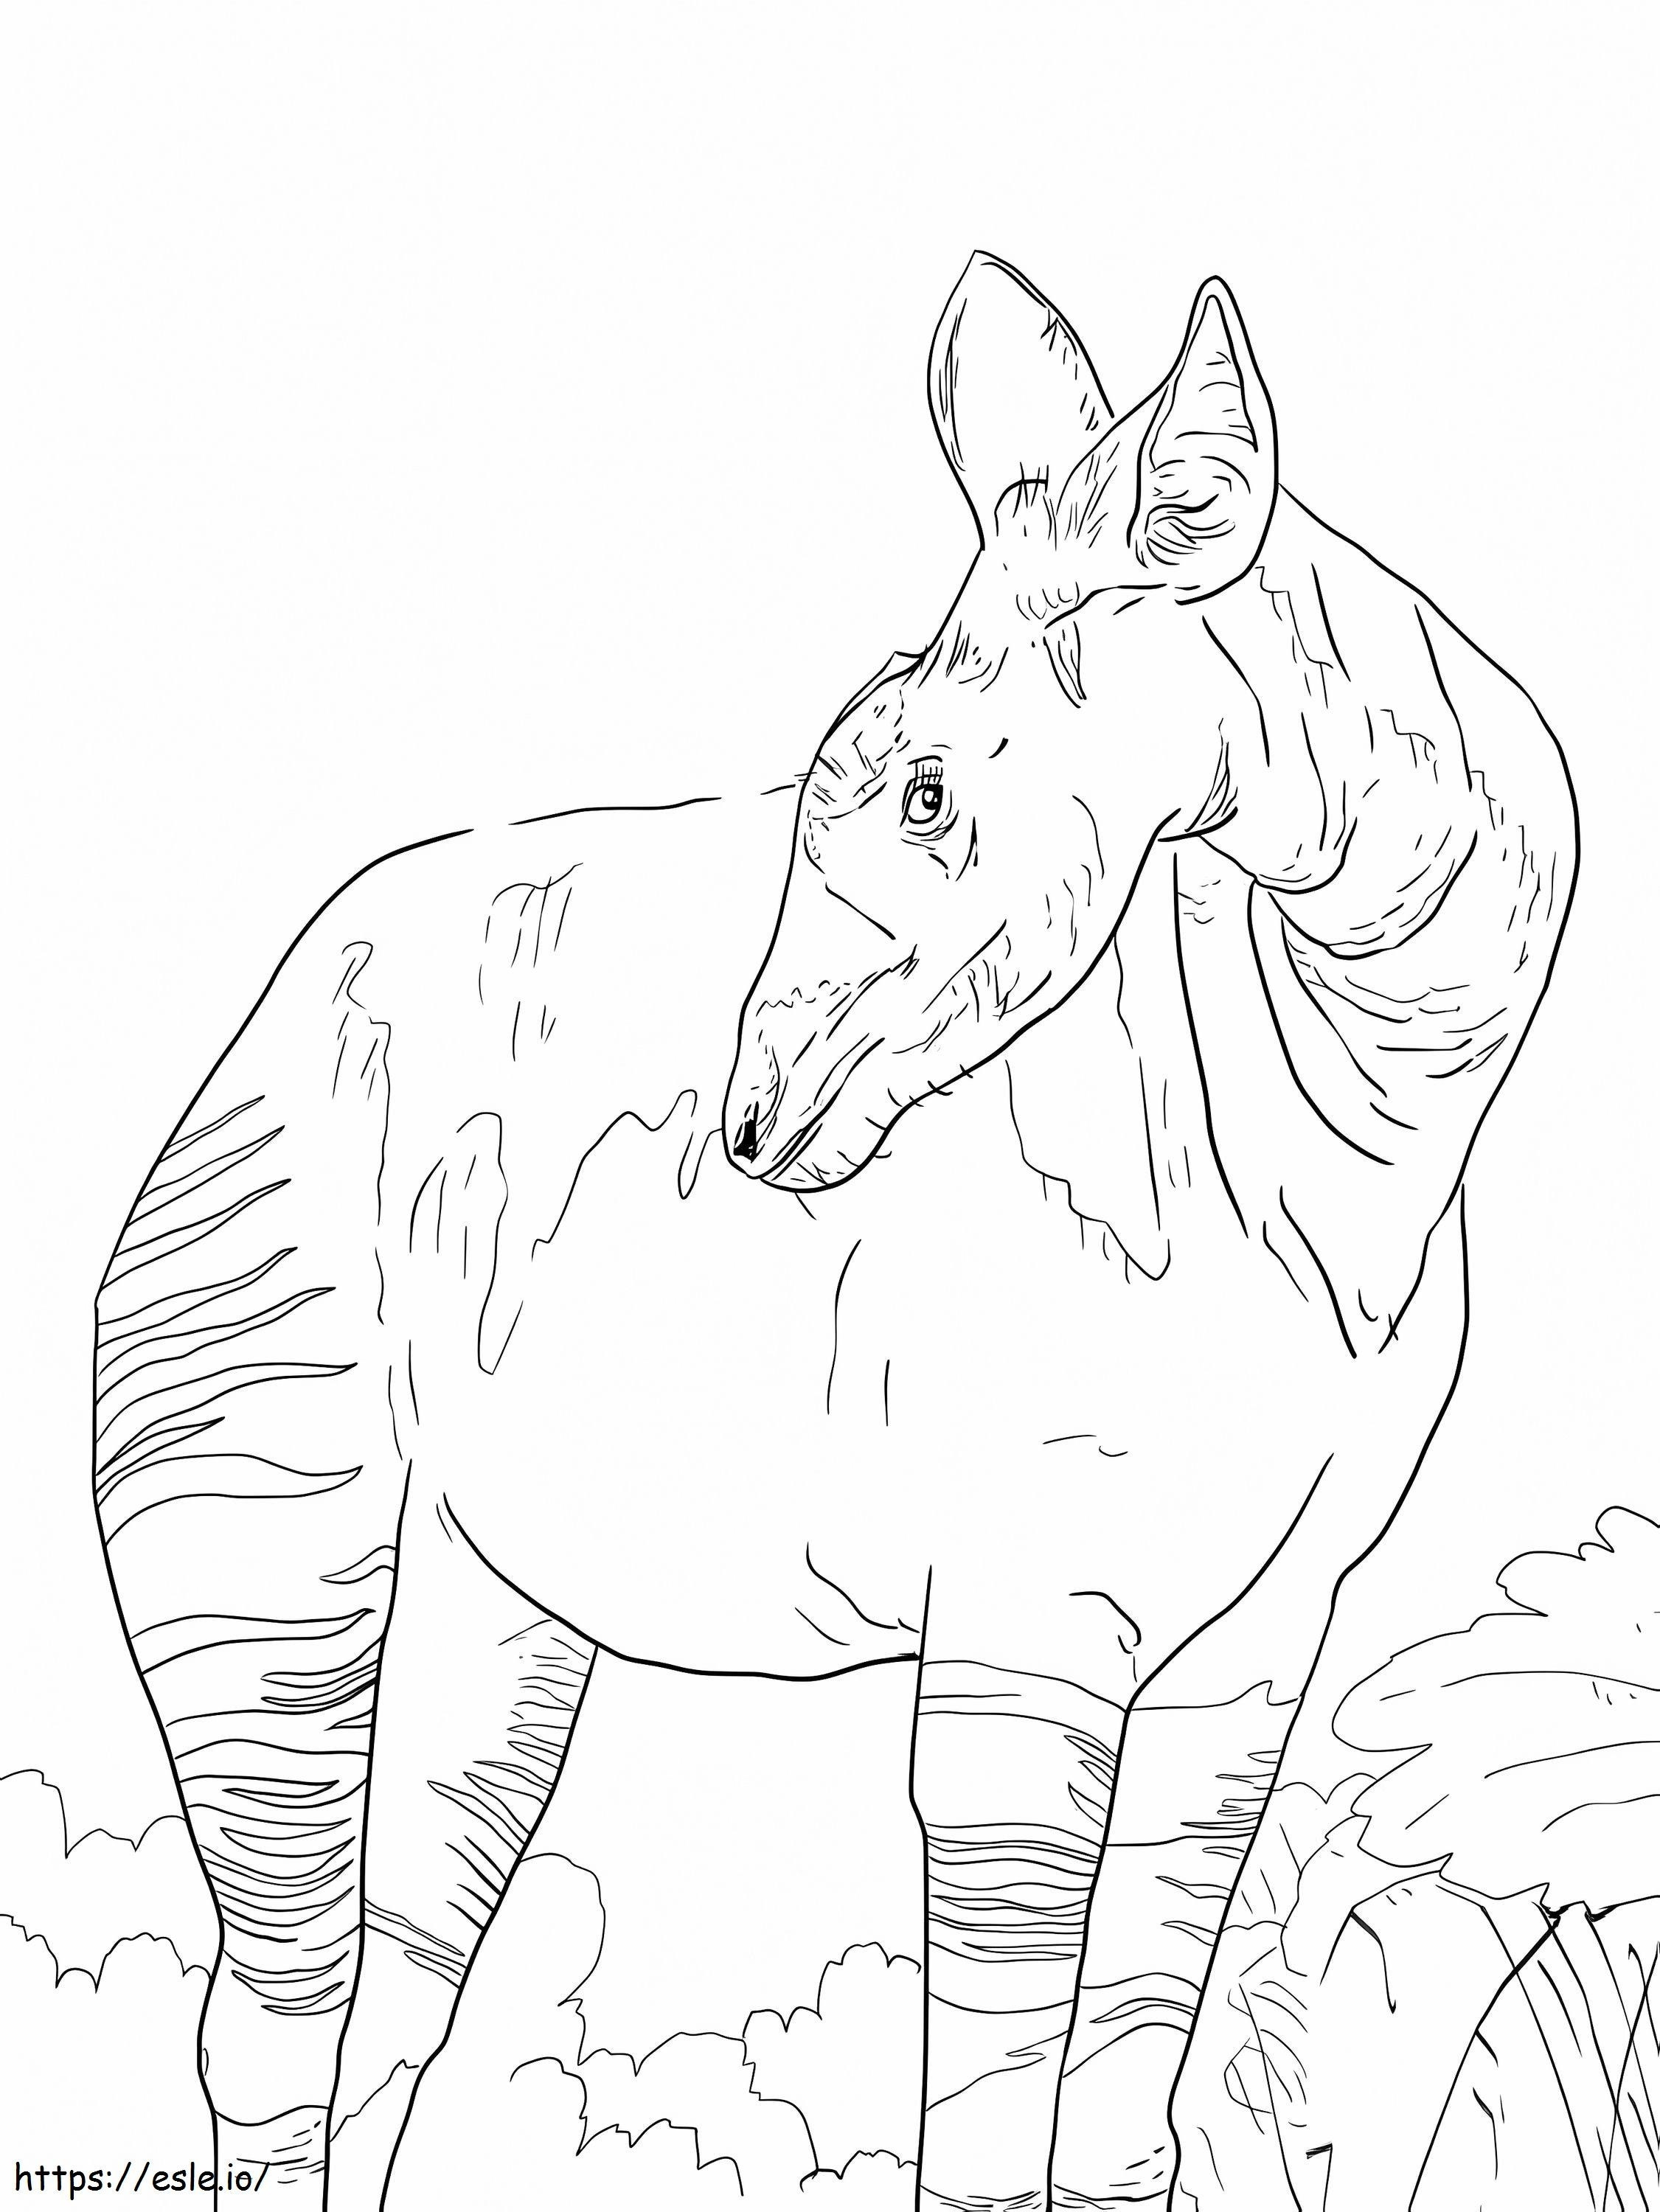 Okapi Giraffid coloring page